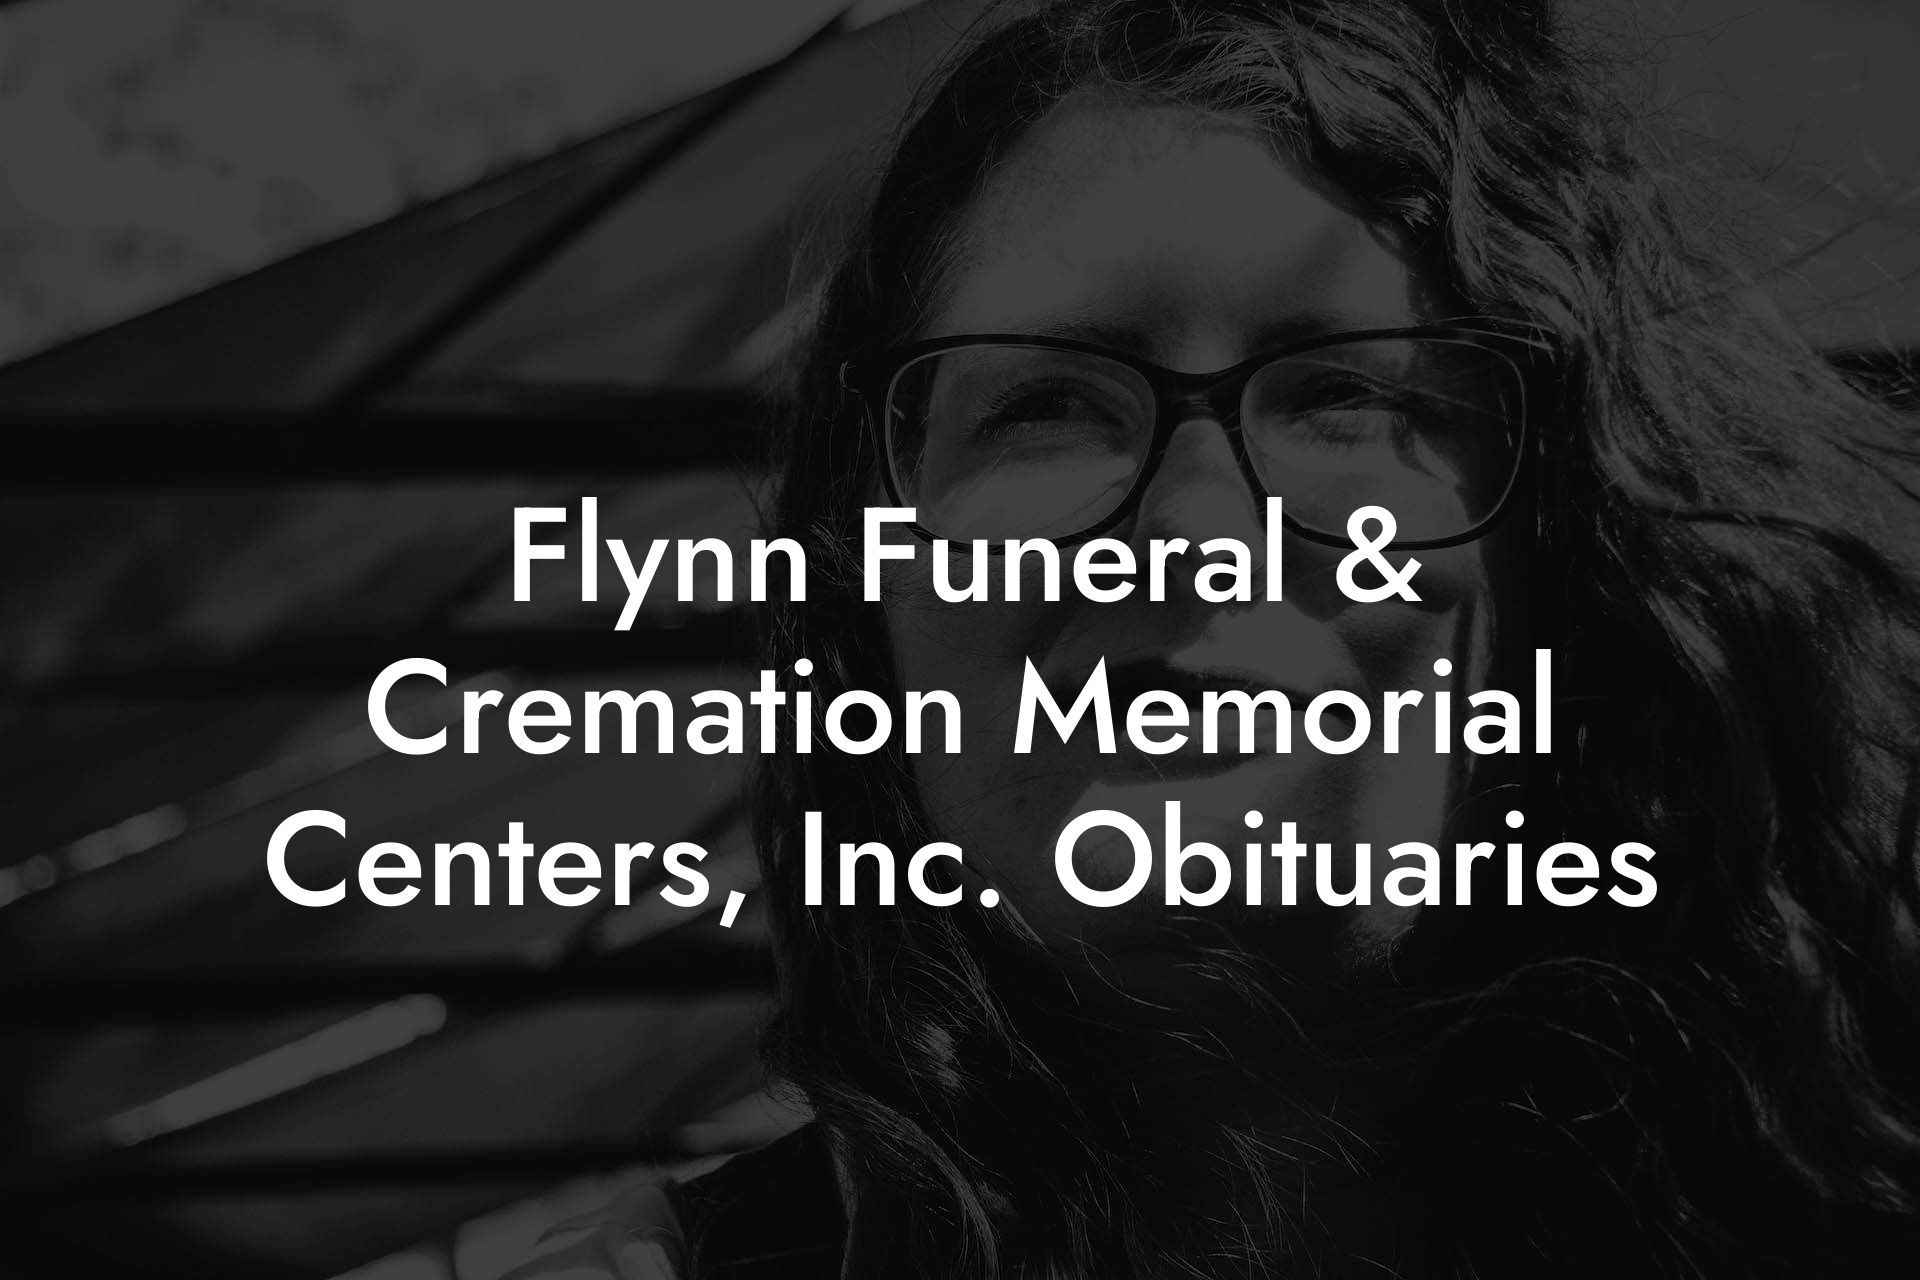 Flynn Funeral & Cremation Memorial Centers, Inc. Obituaries